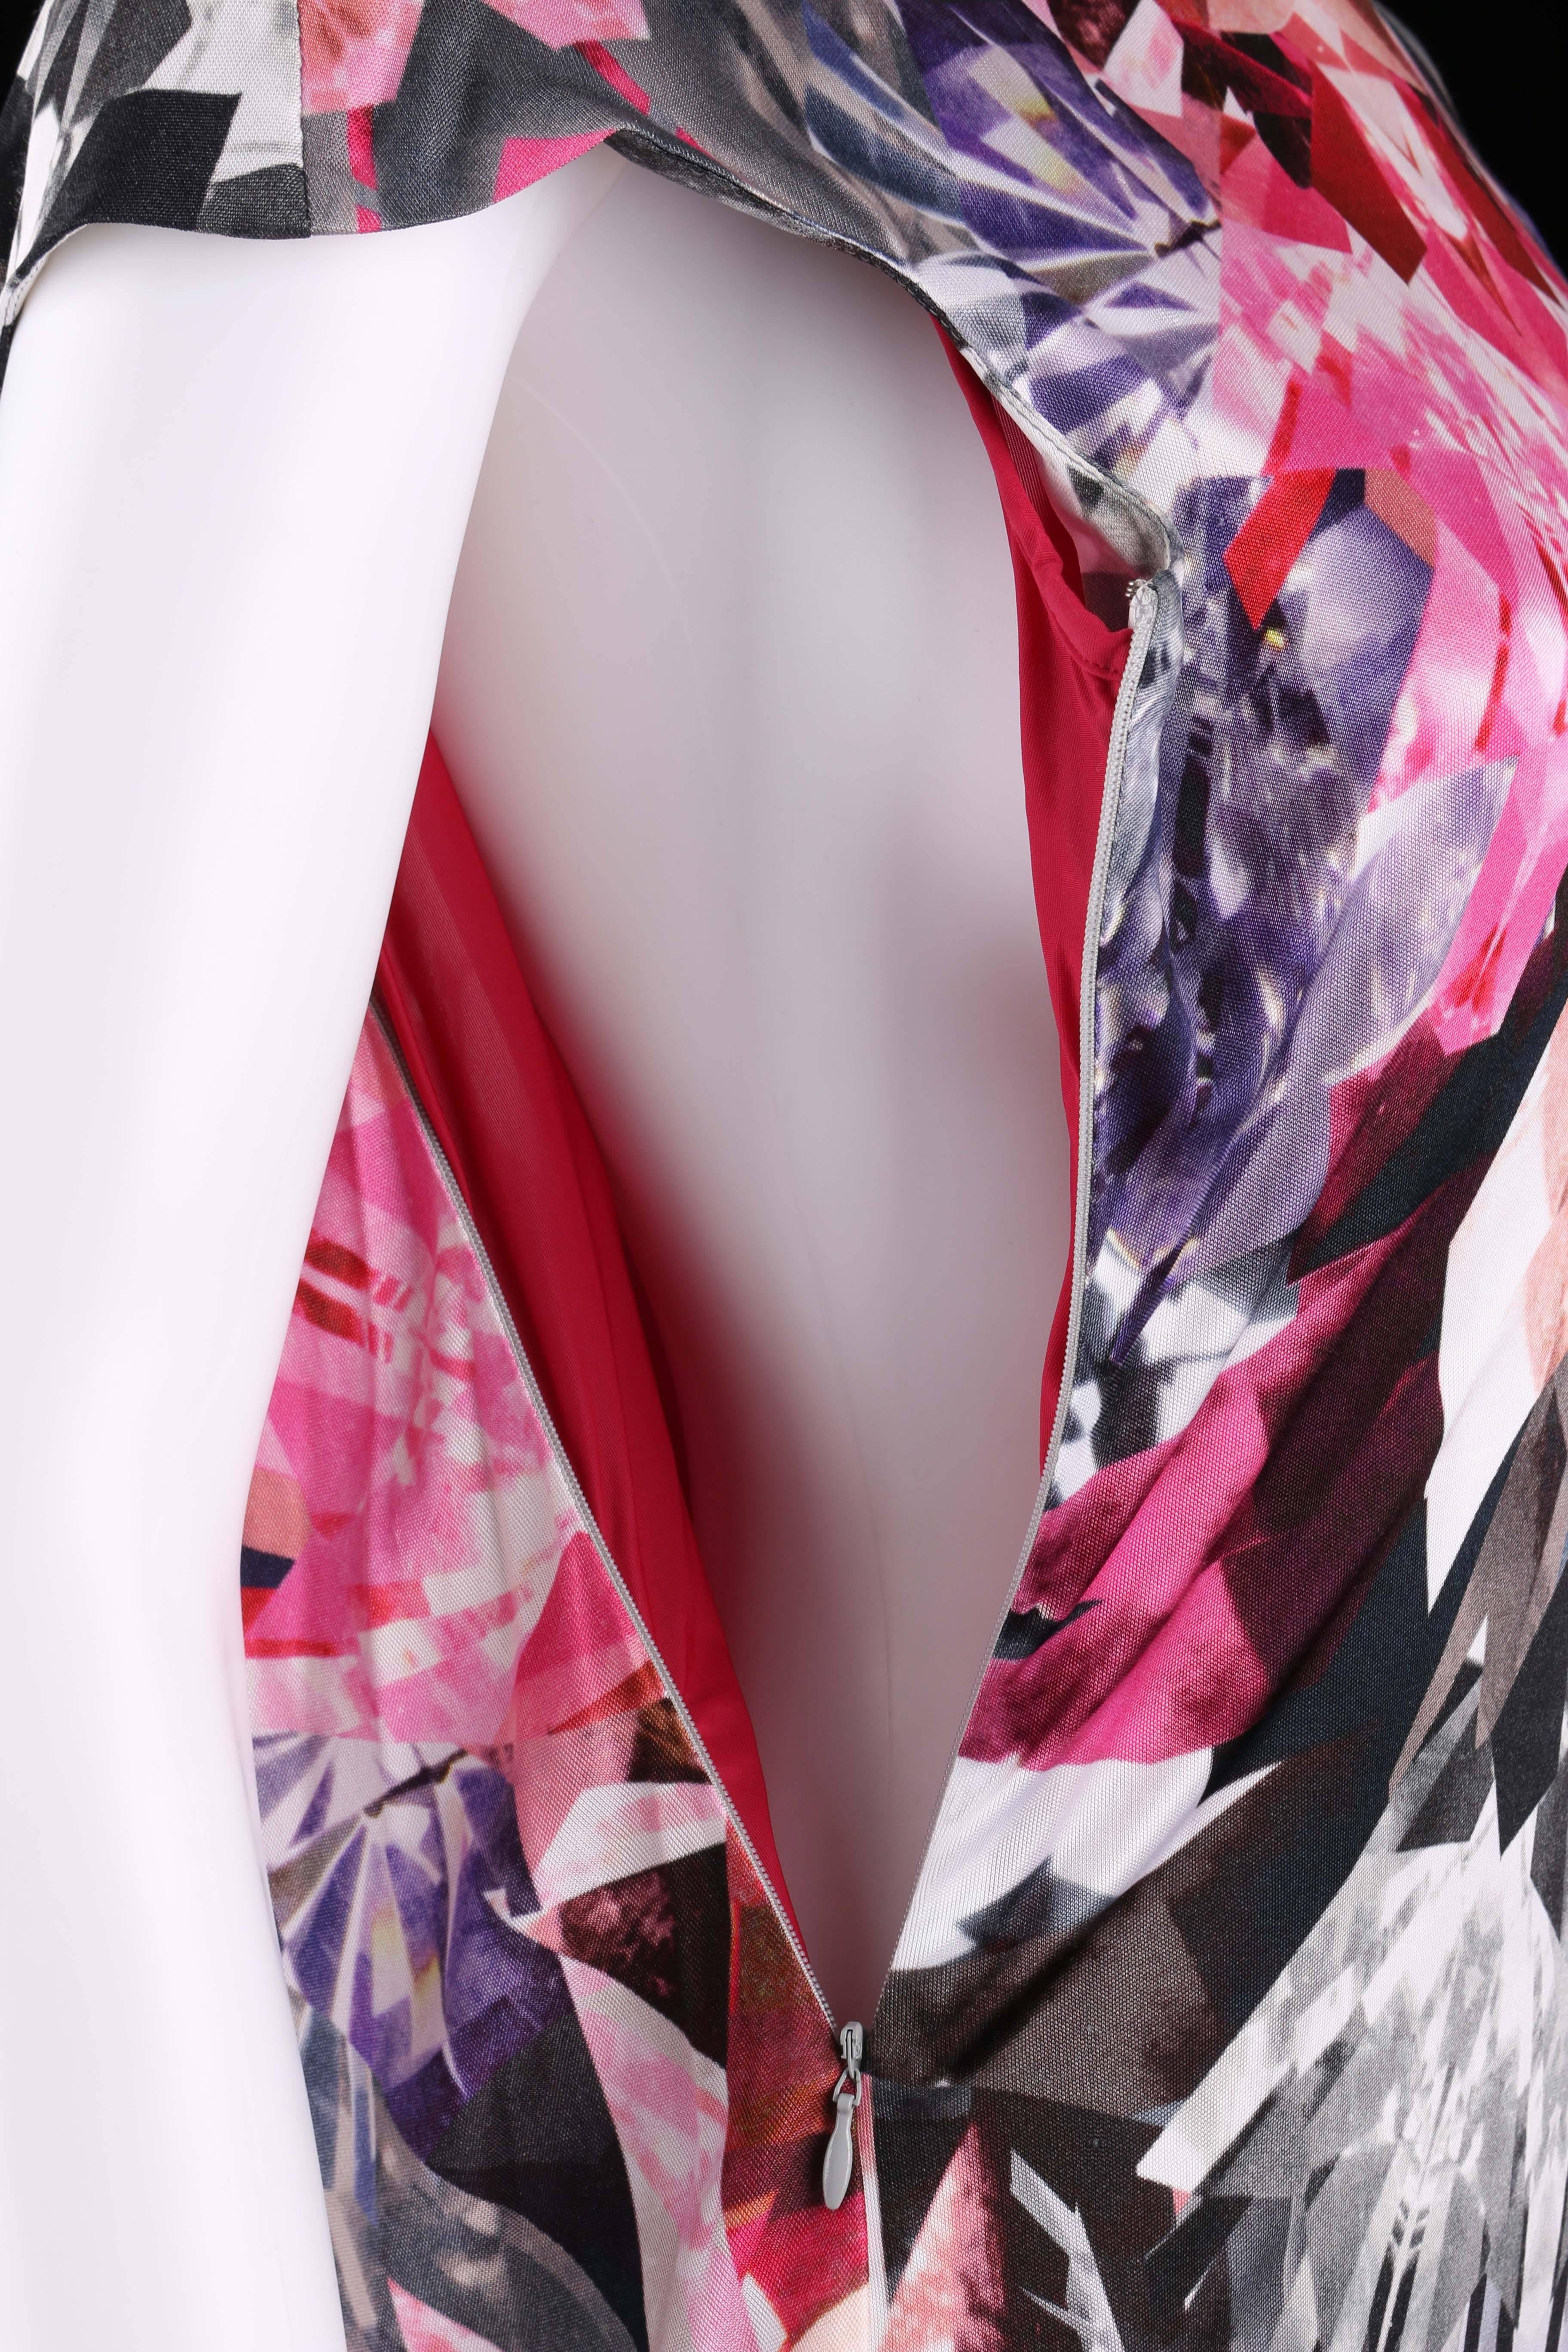 ALEXANDER McQUEEN  S/S 2009 Iconic Crystal Kaleidoscope Print Dress Size 42 3